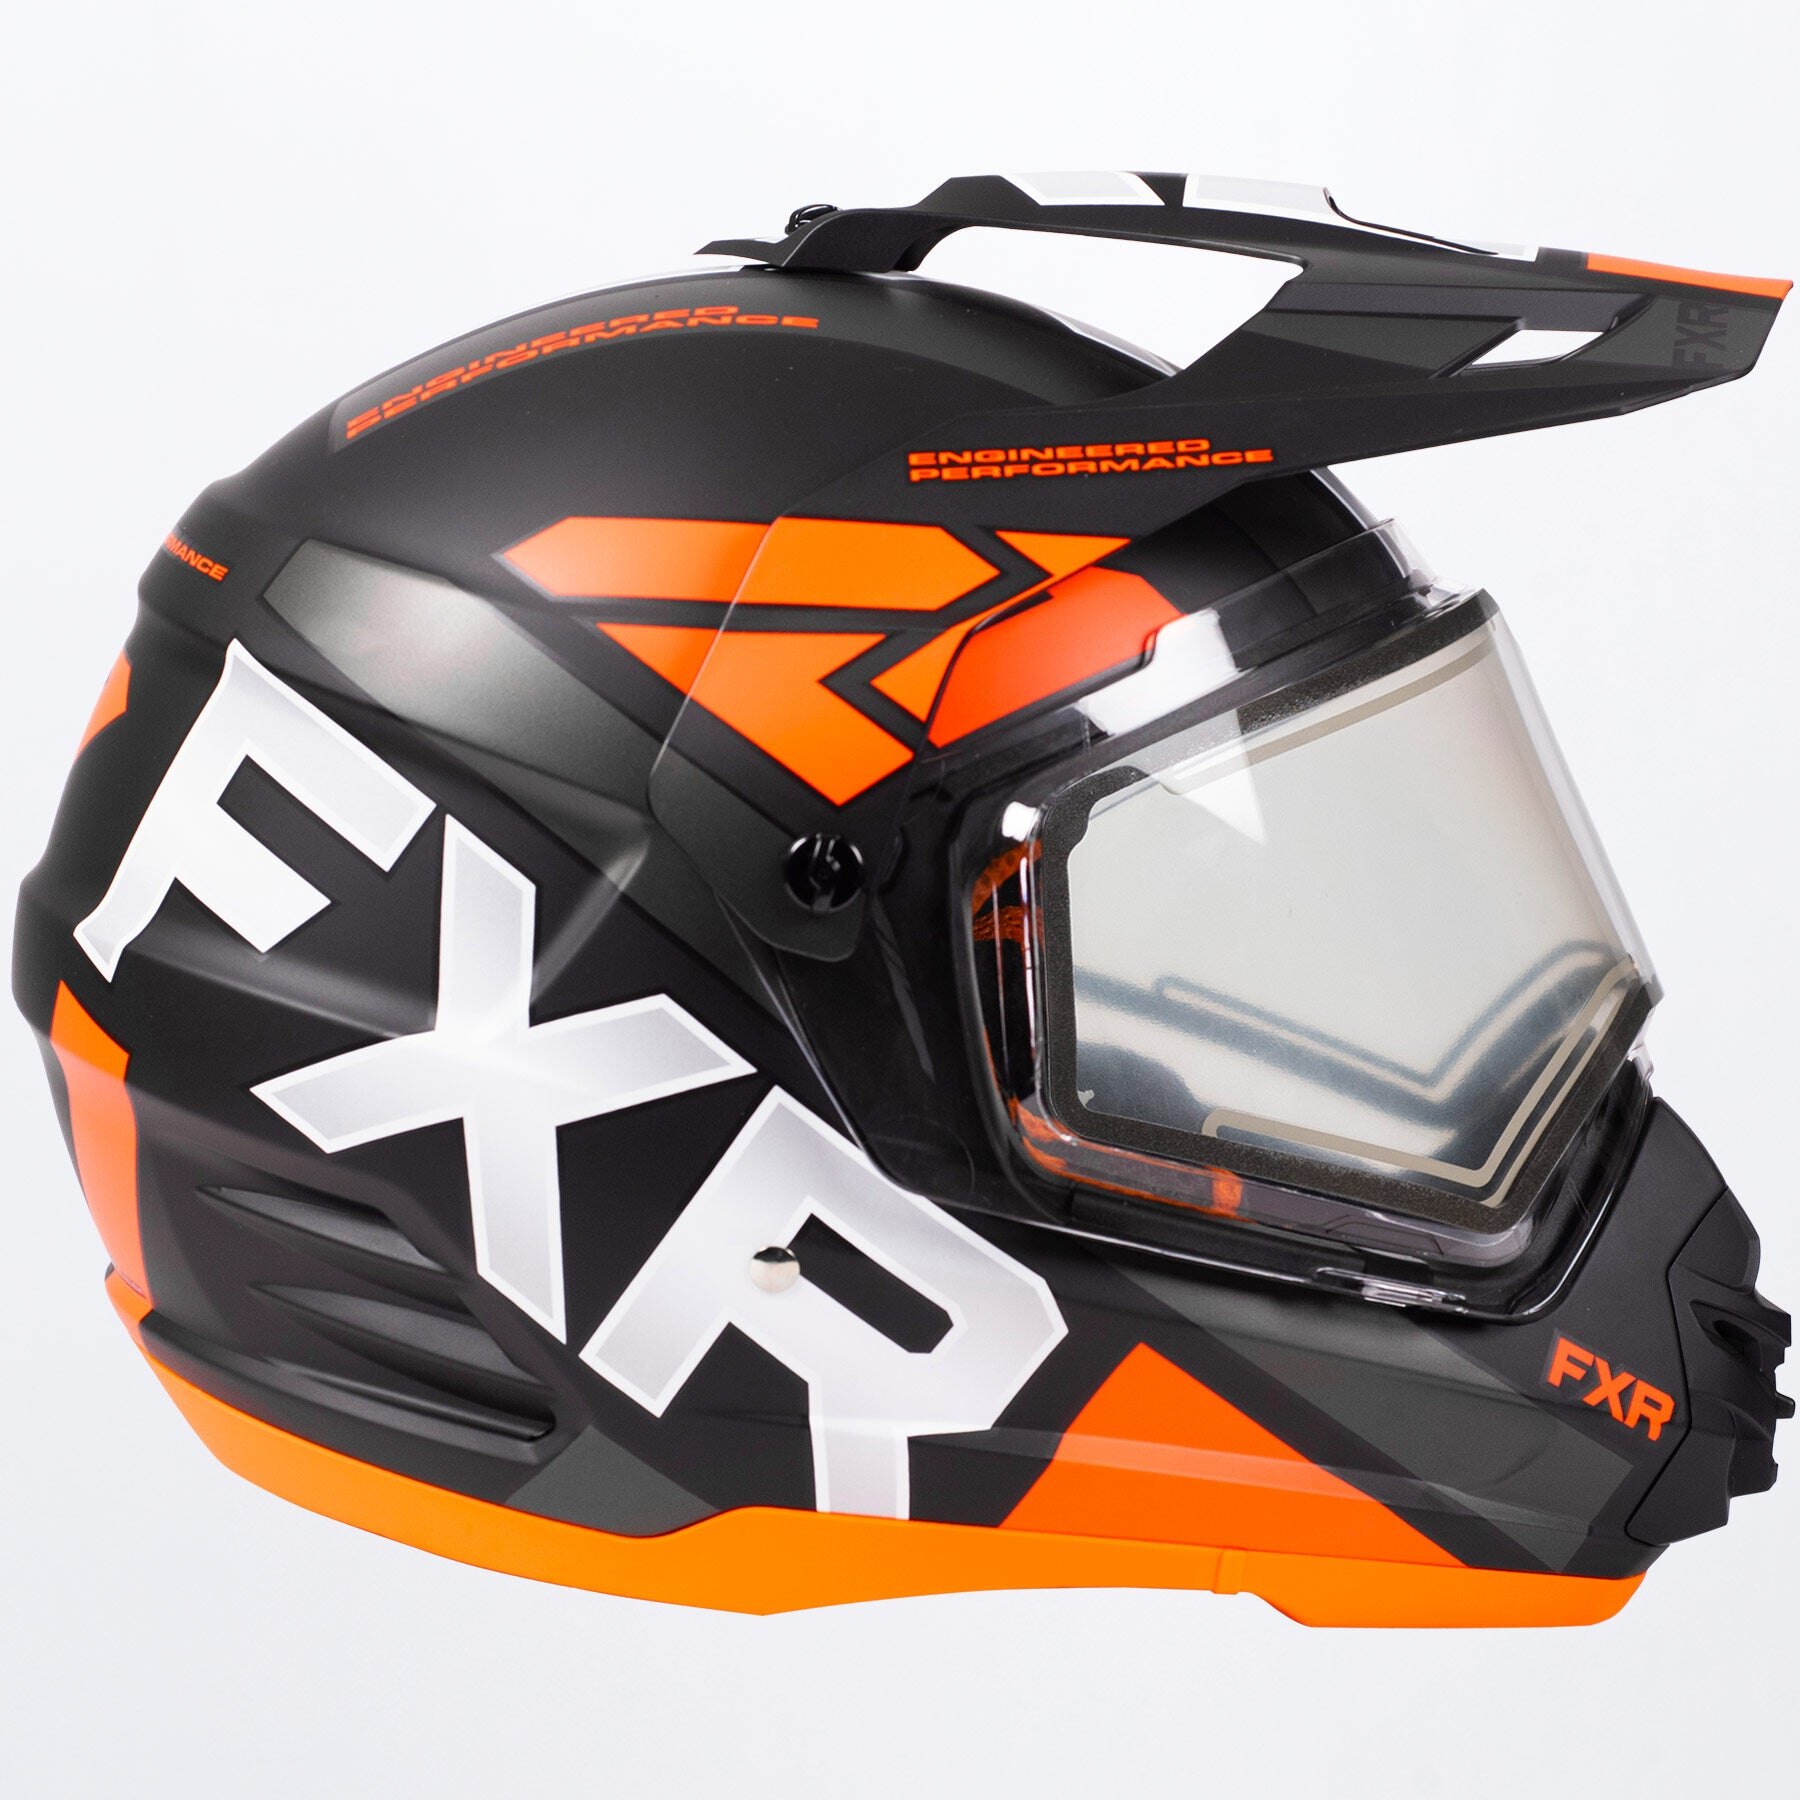 Torque X Evo Helmet with Electric Shield